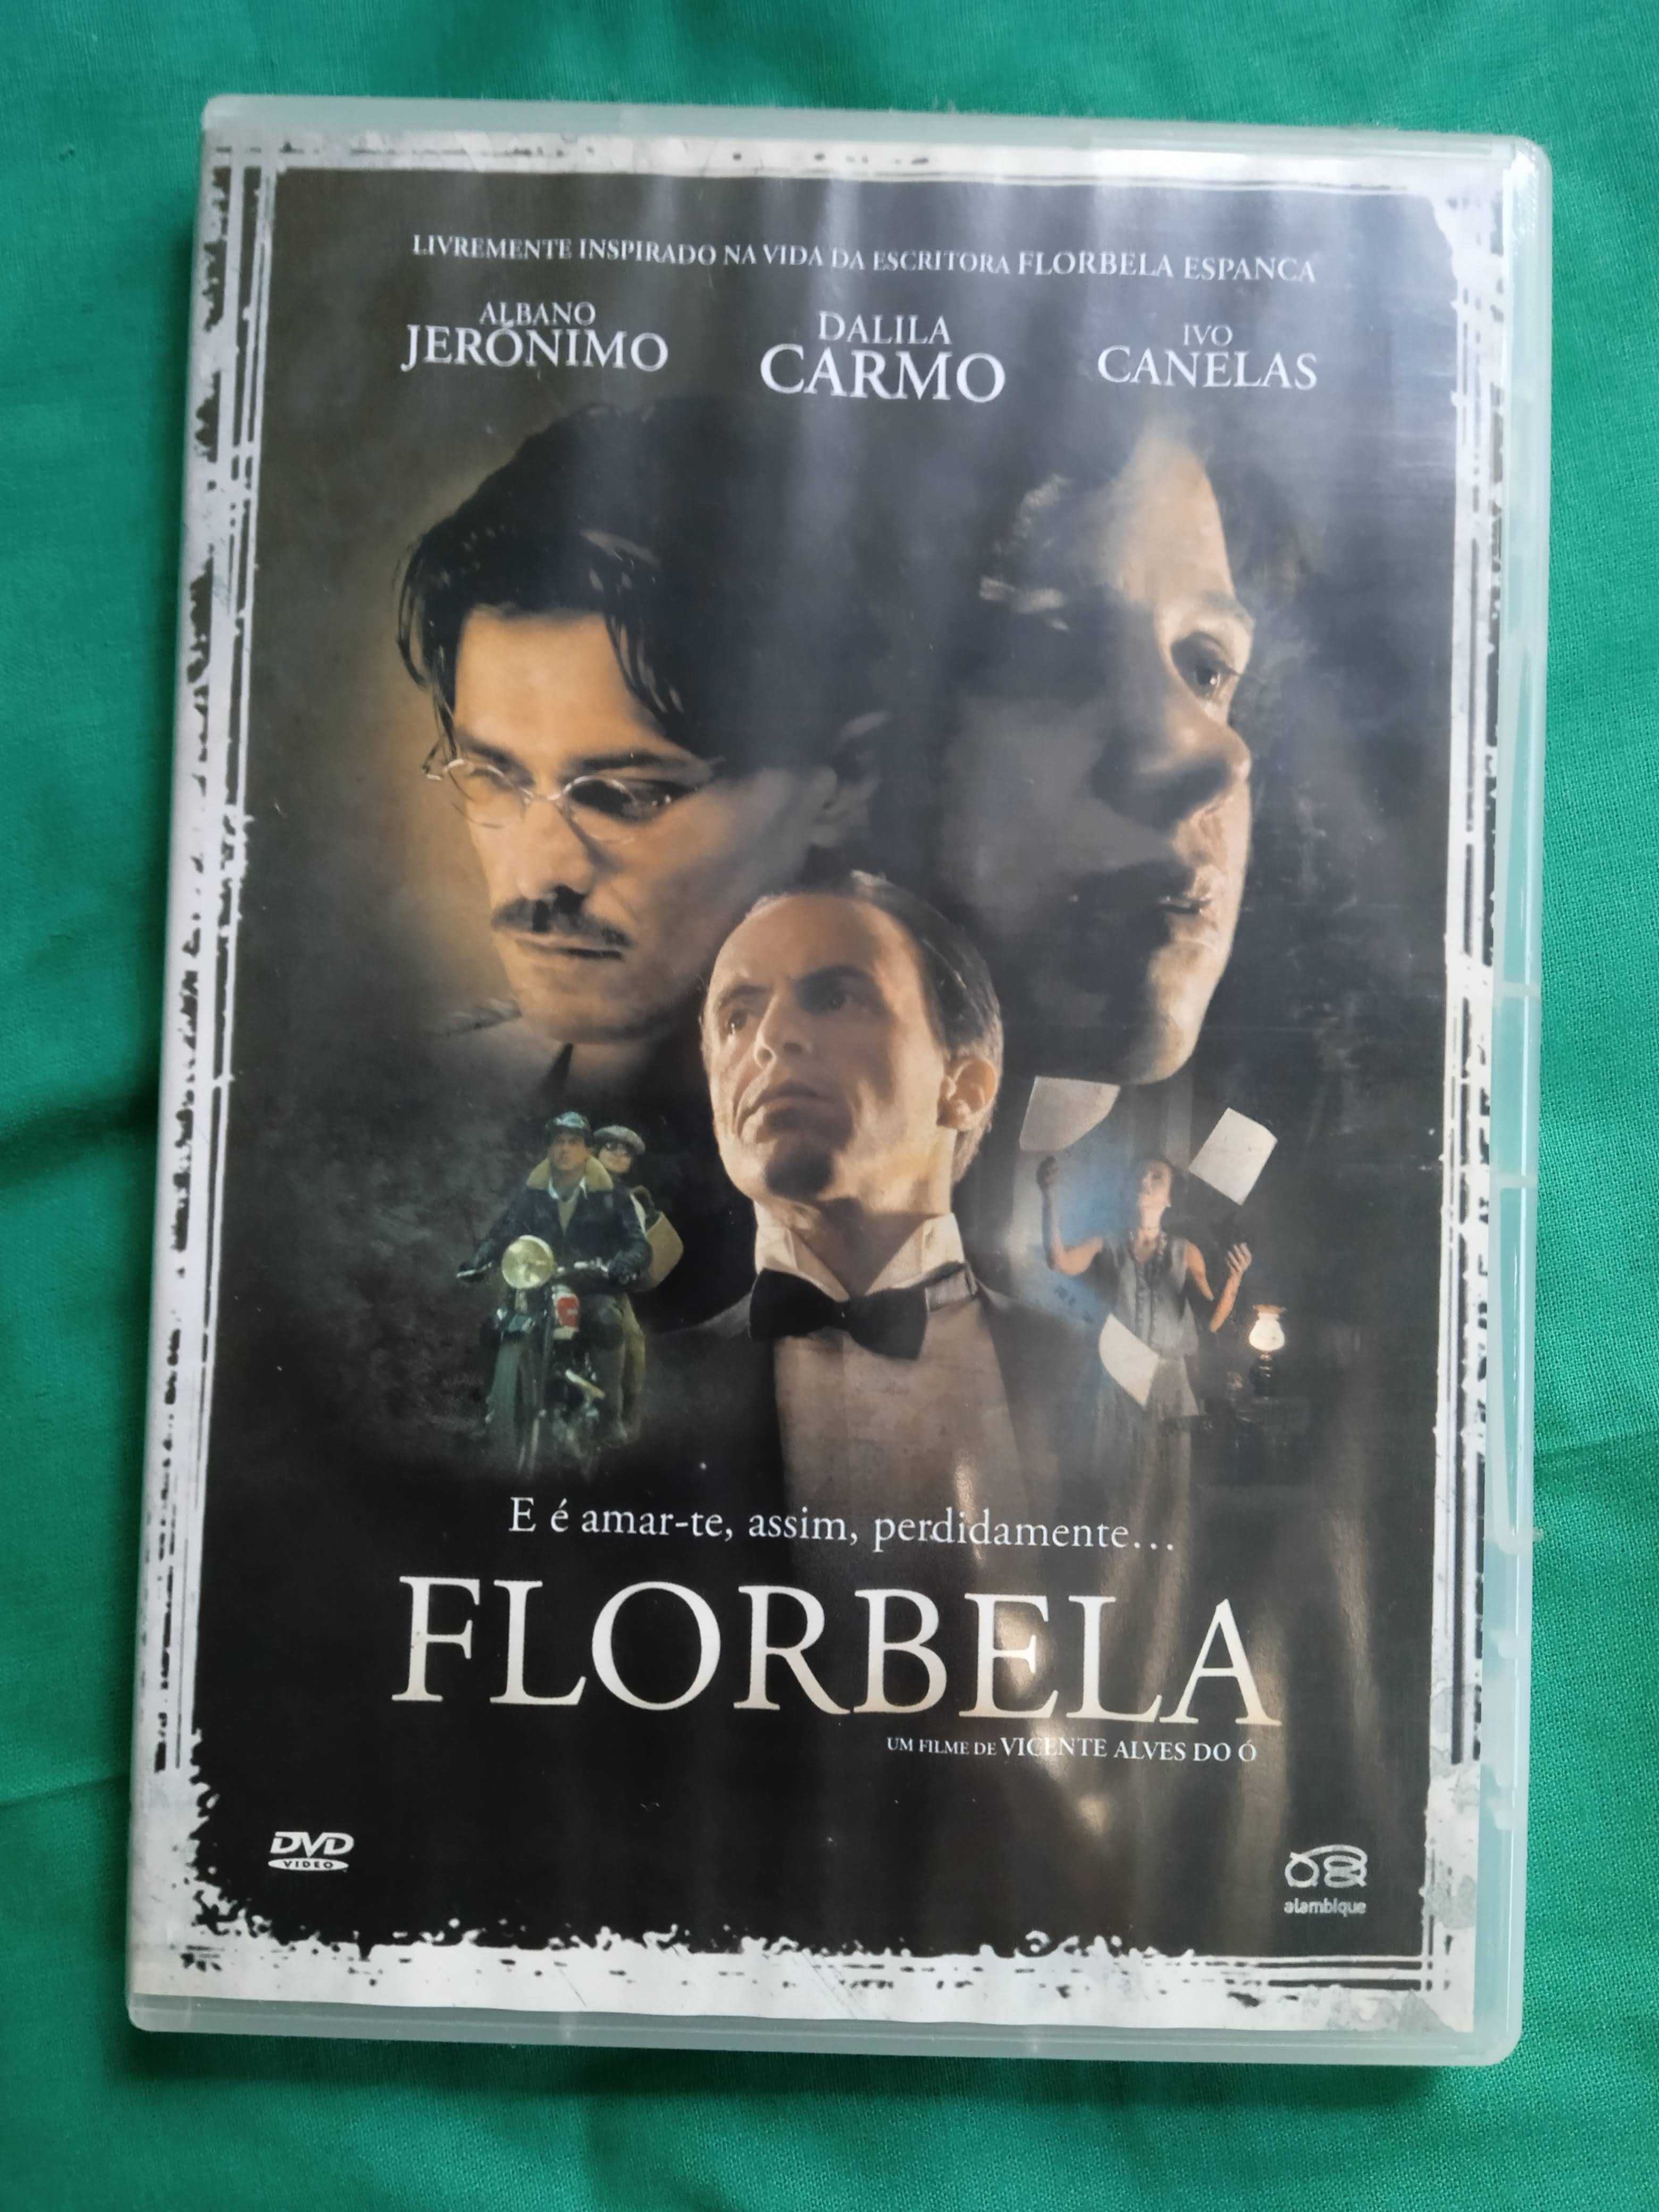 DVD Florbela (Vicente Alves do Ó,2012)